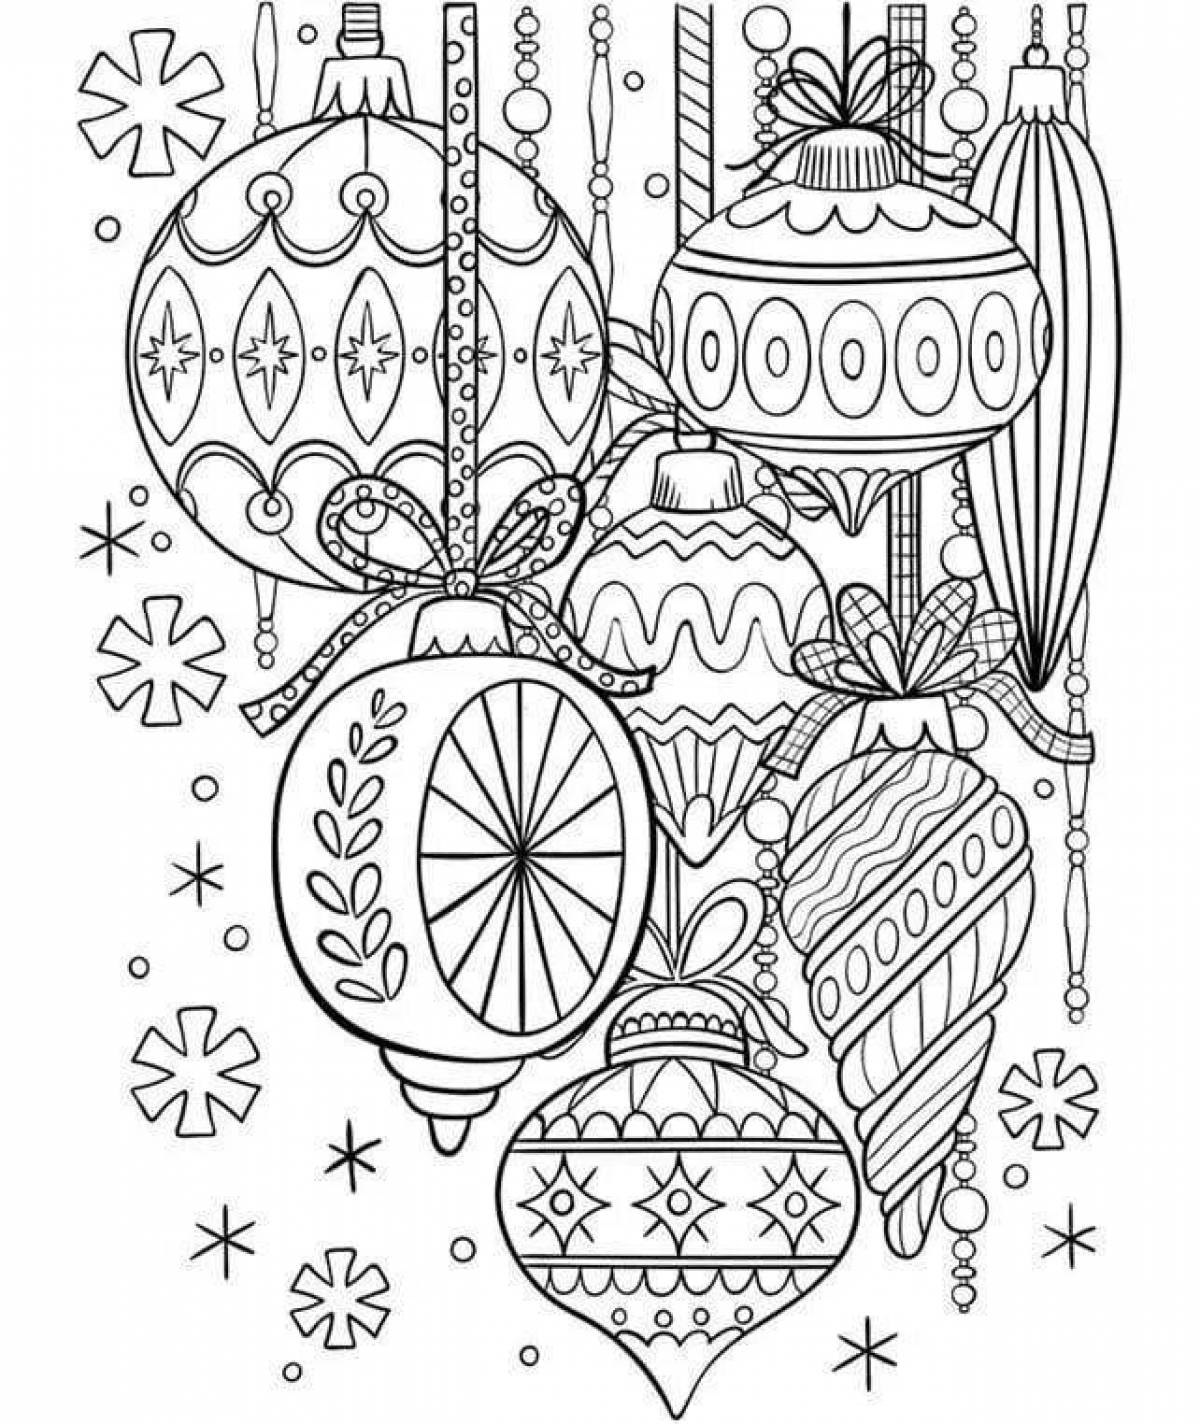 Adorable Christmas anti-stress coloring book